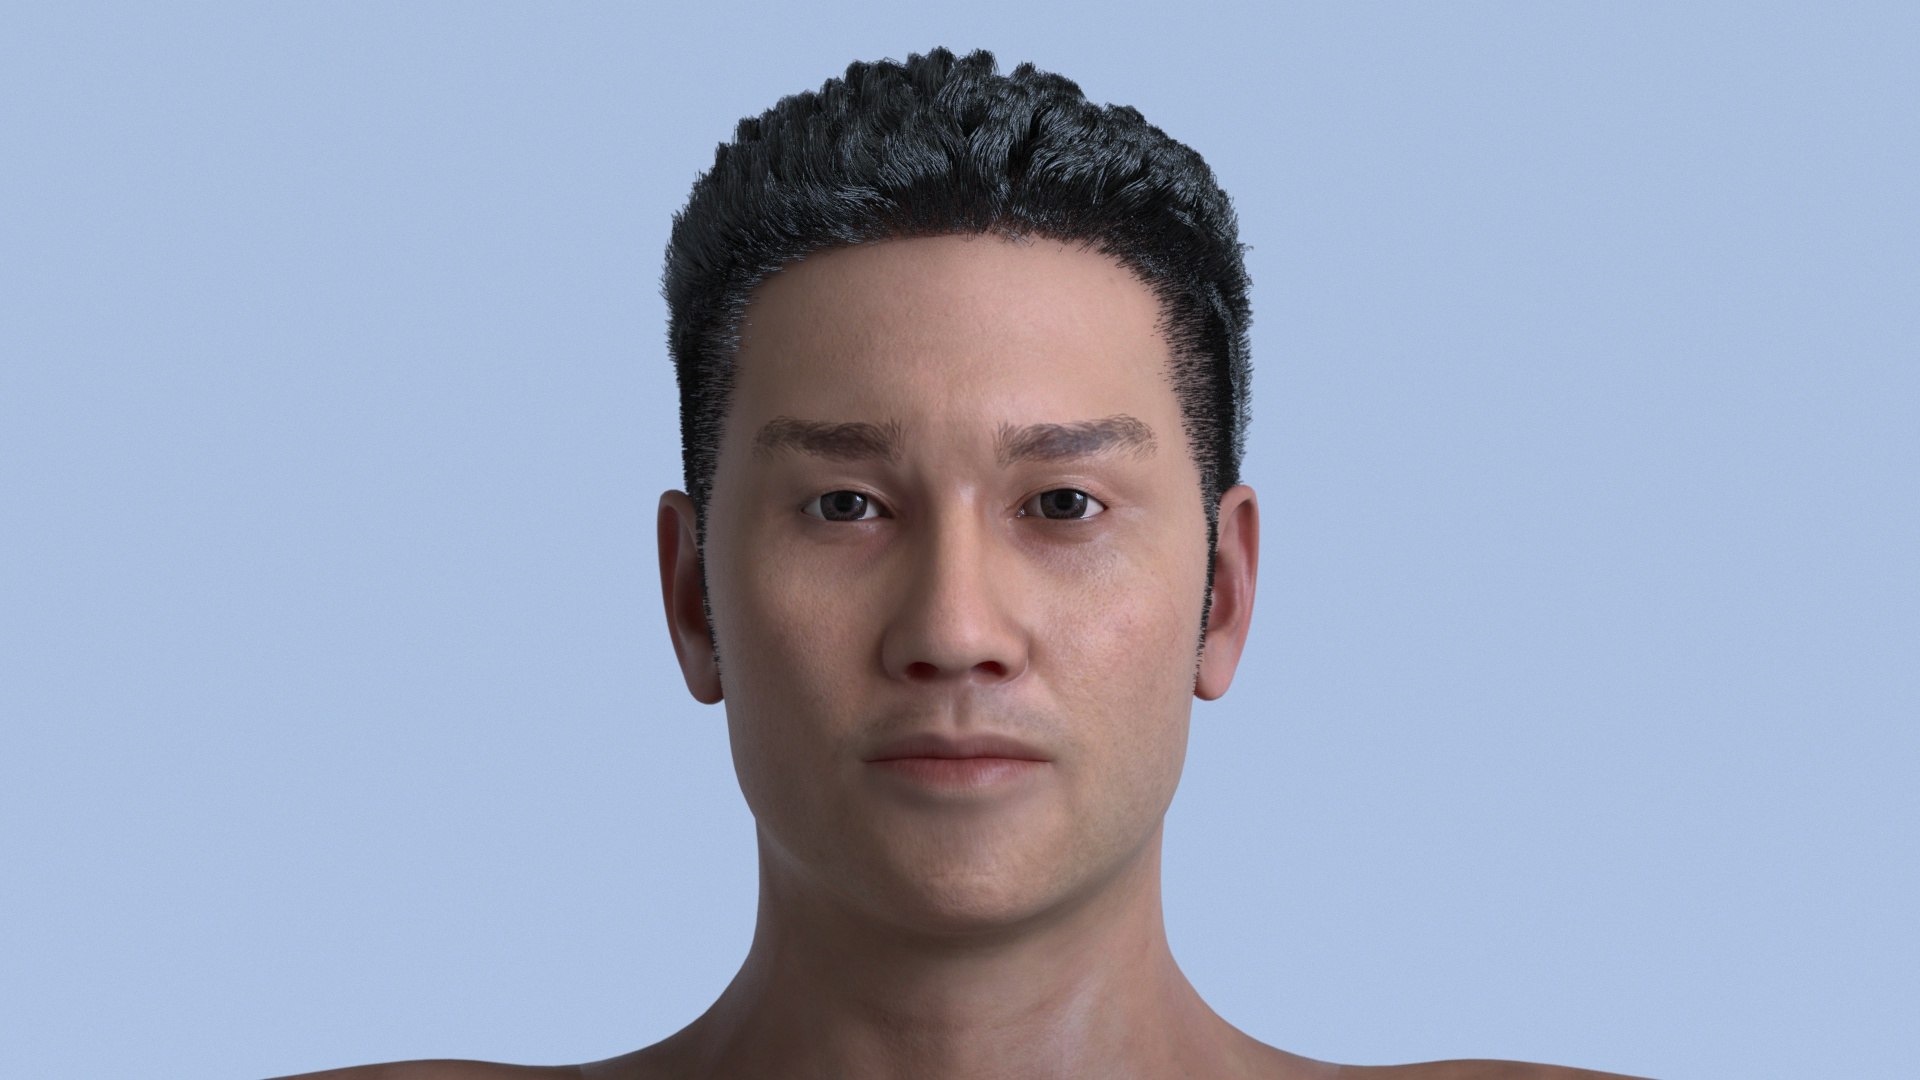 File:Asian man face.jpg - Wikimedia Commons